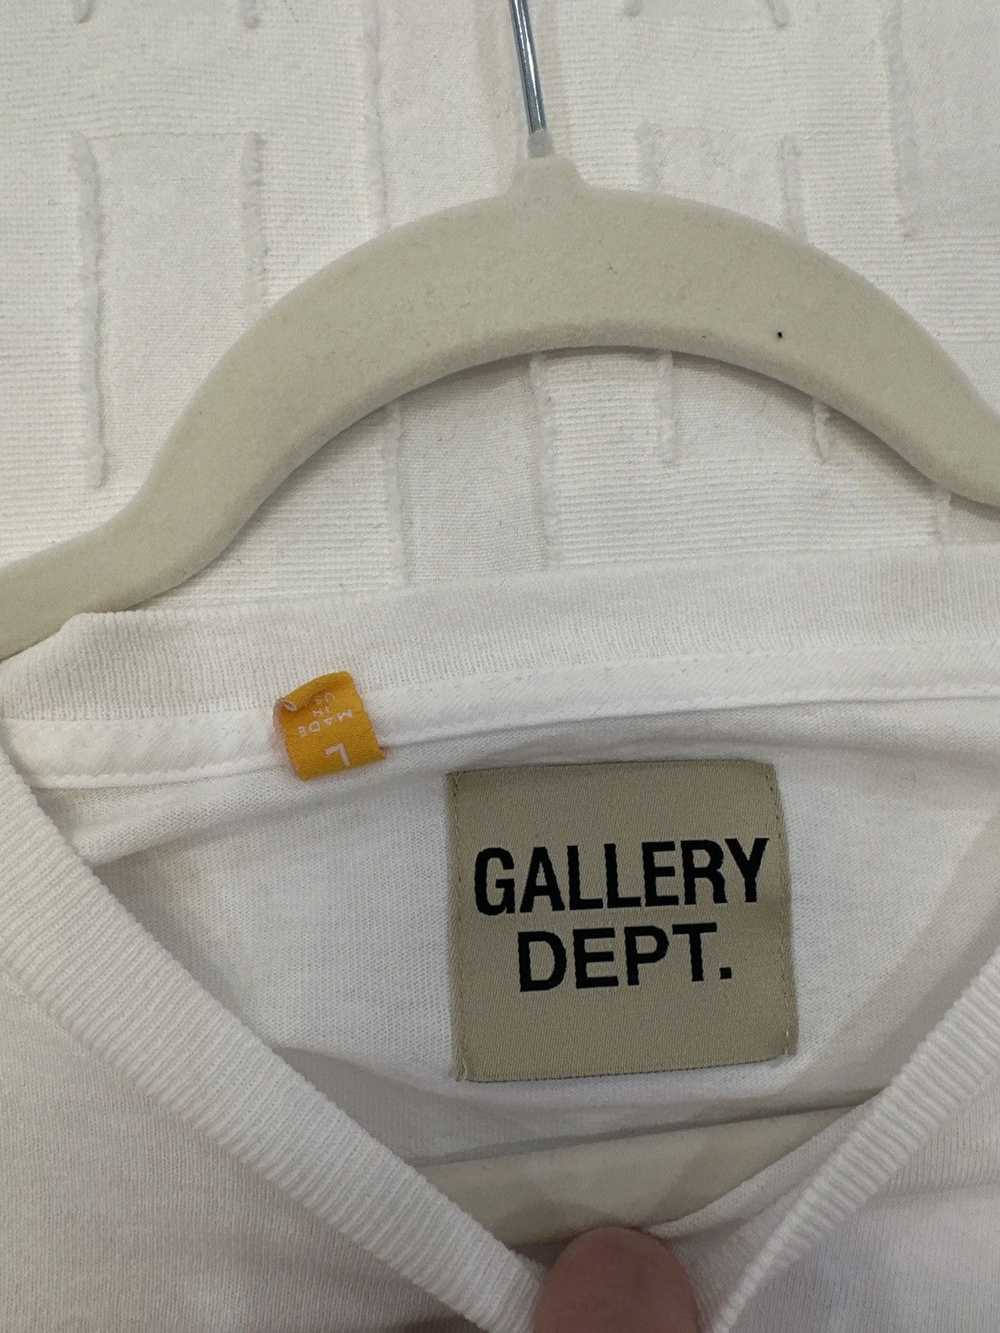 Gallery Dept. Gallery dept t shirt - image 3